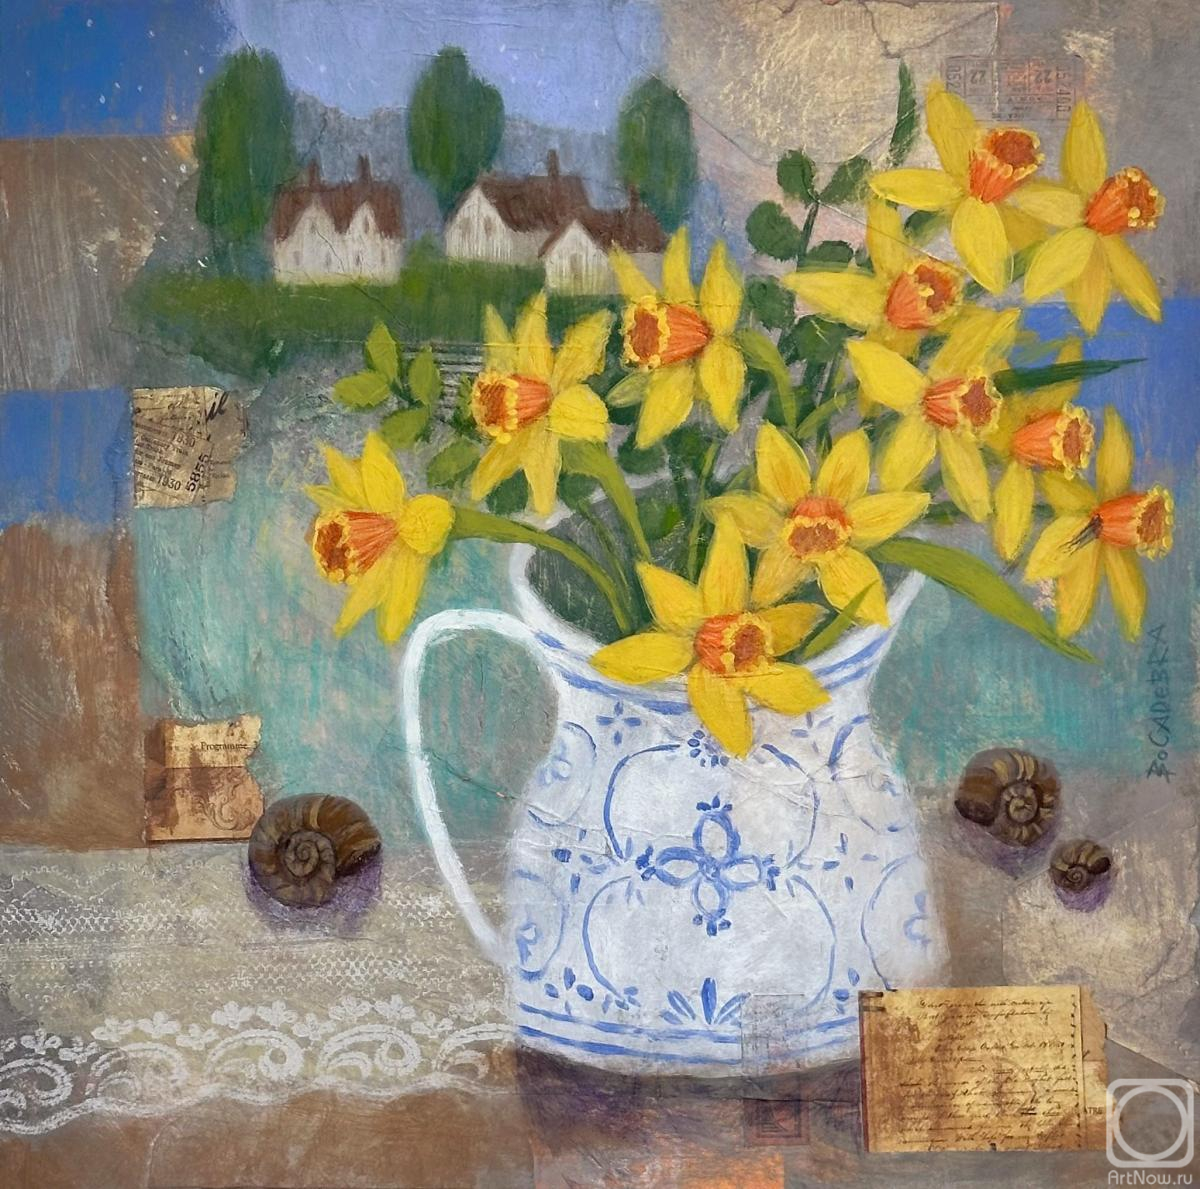 Solntseva Nadezhda. Morning daffodils